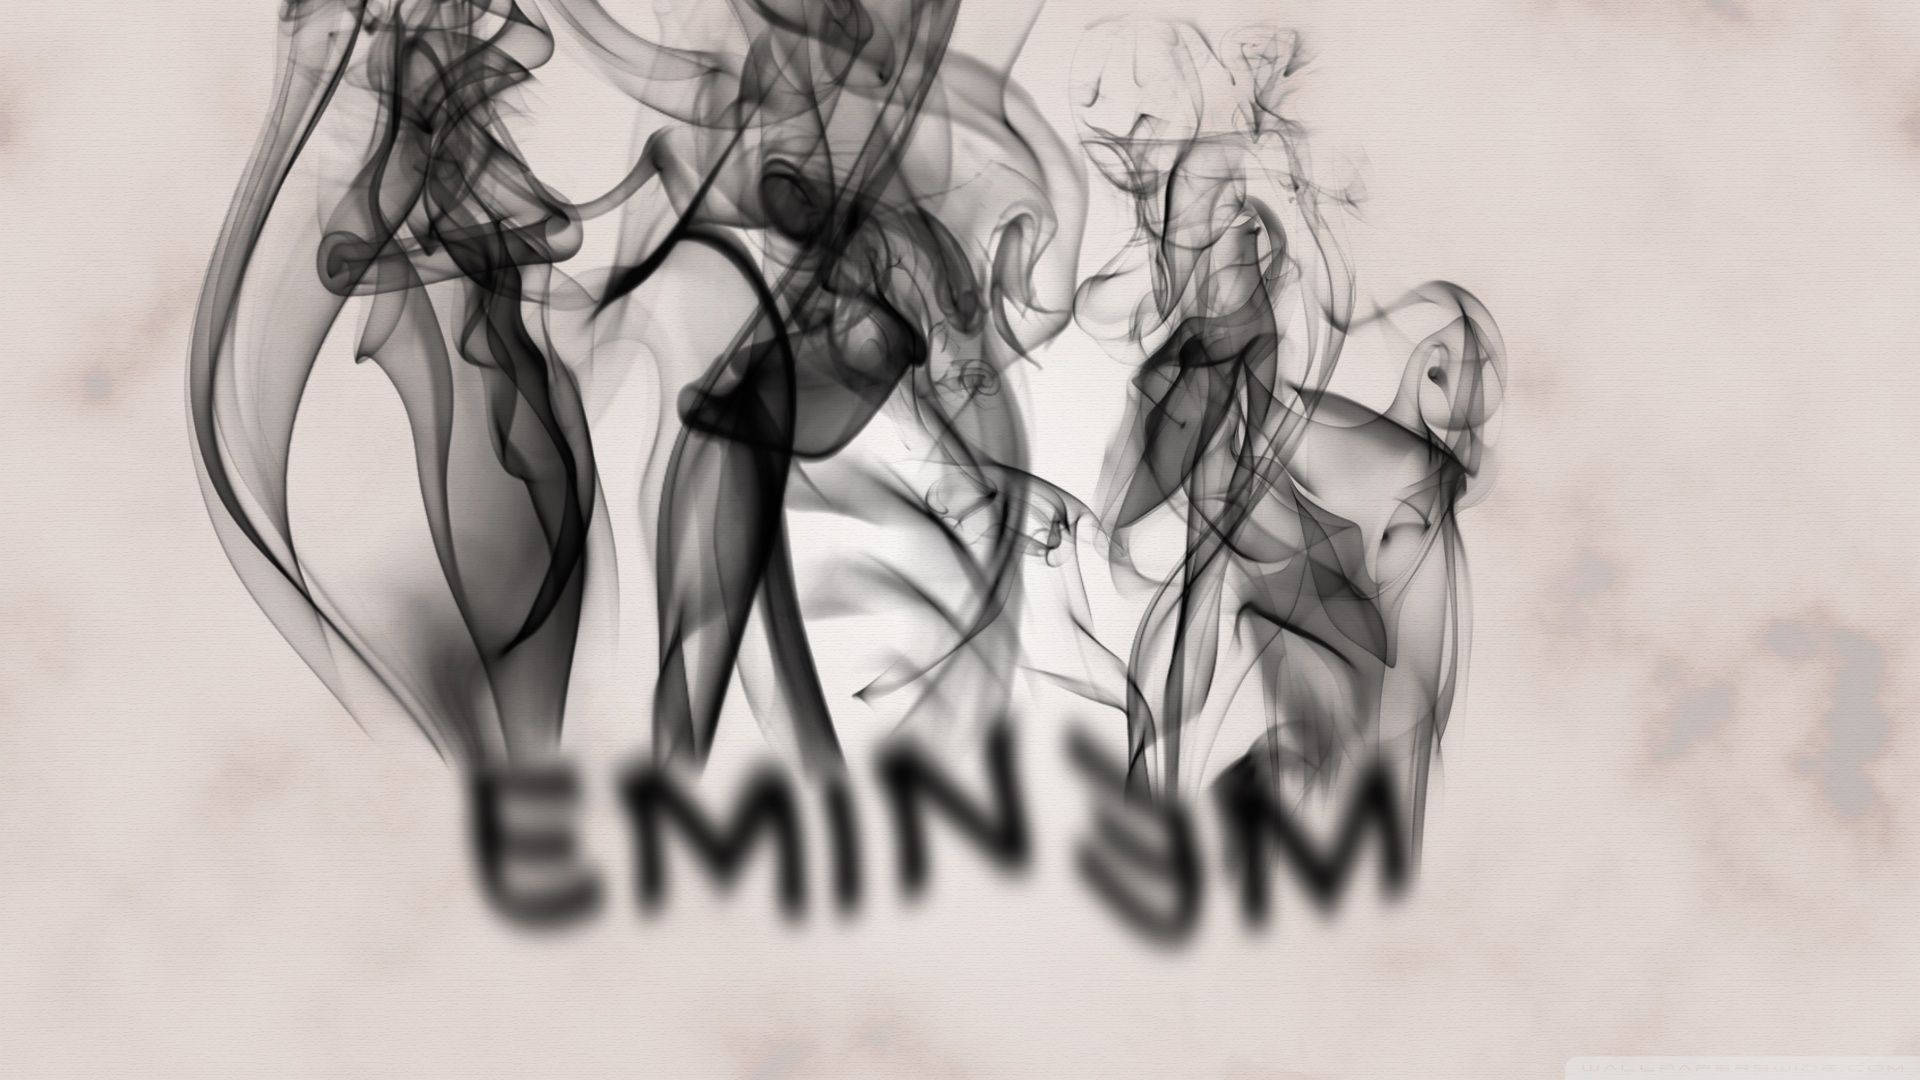 1920X1080 Eminem Wallpaper and Background